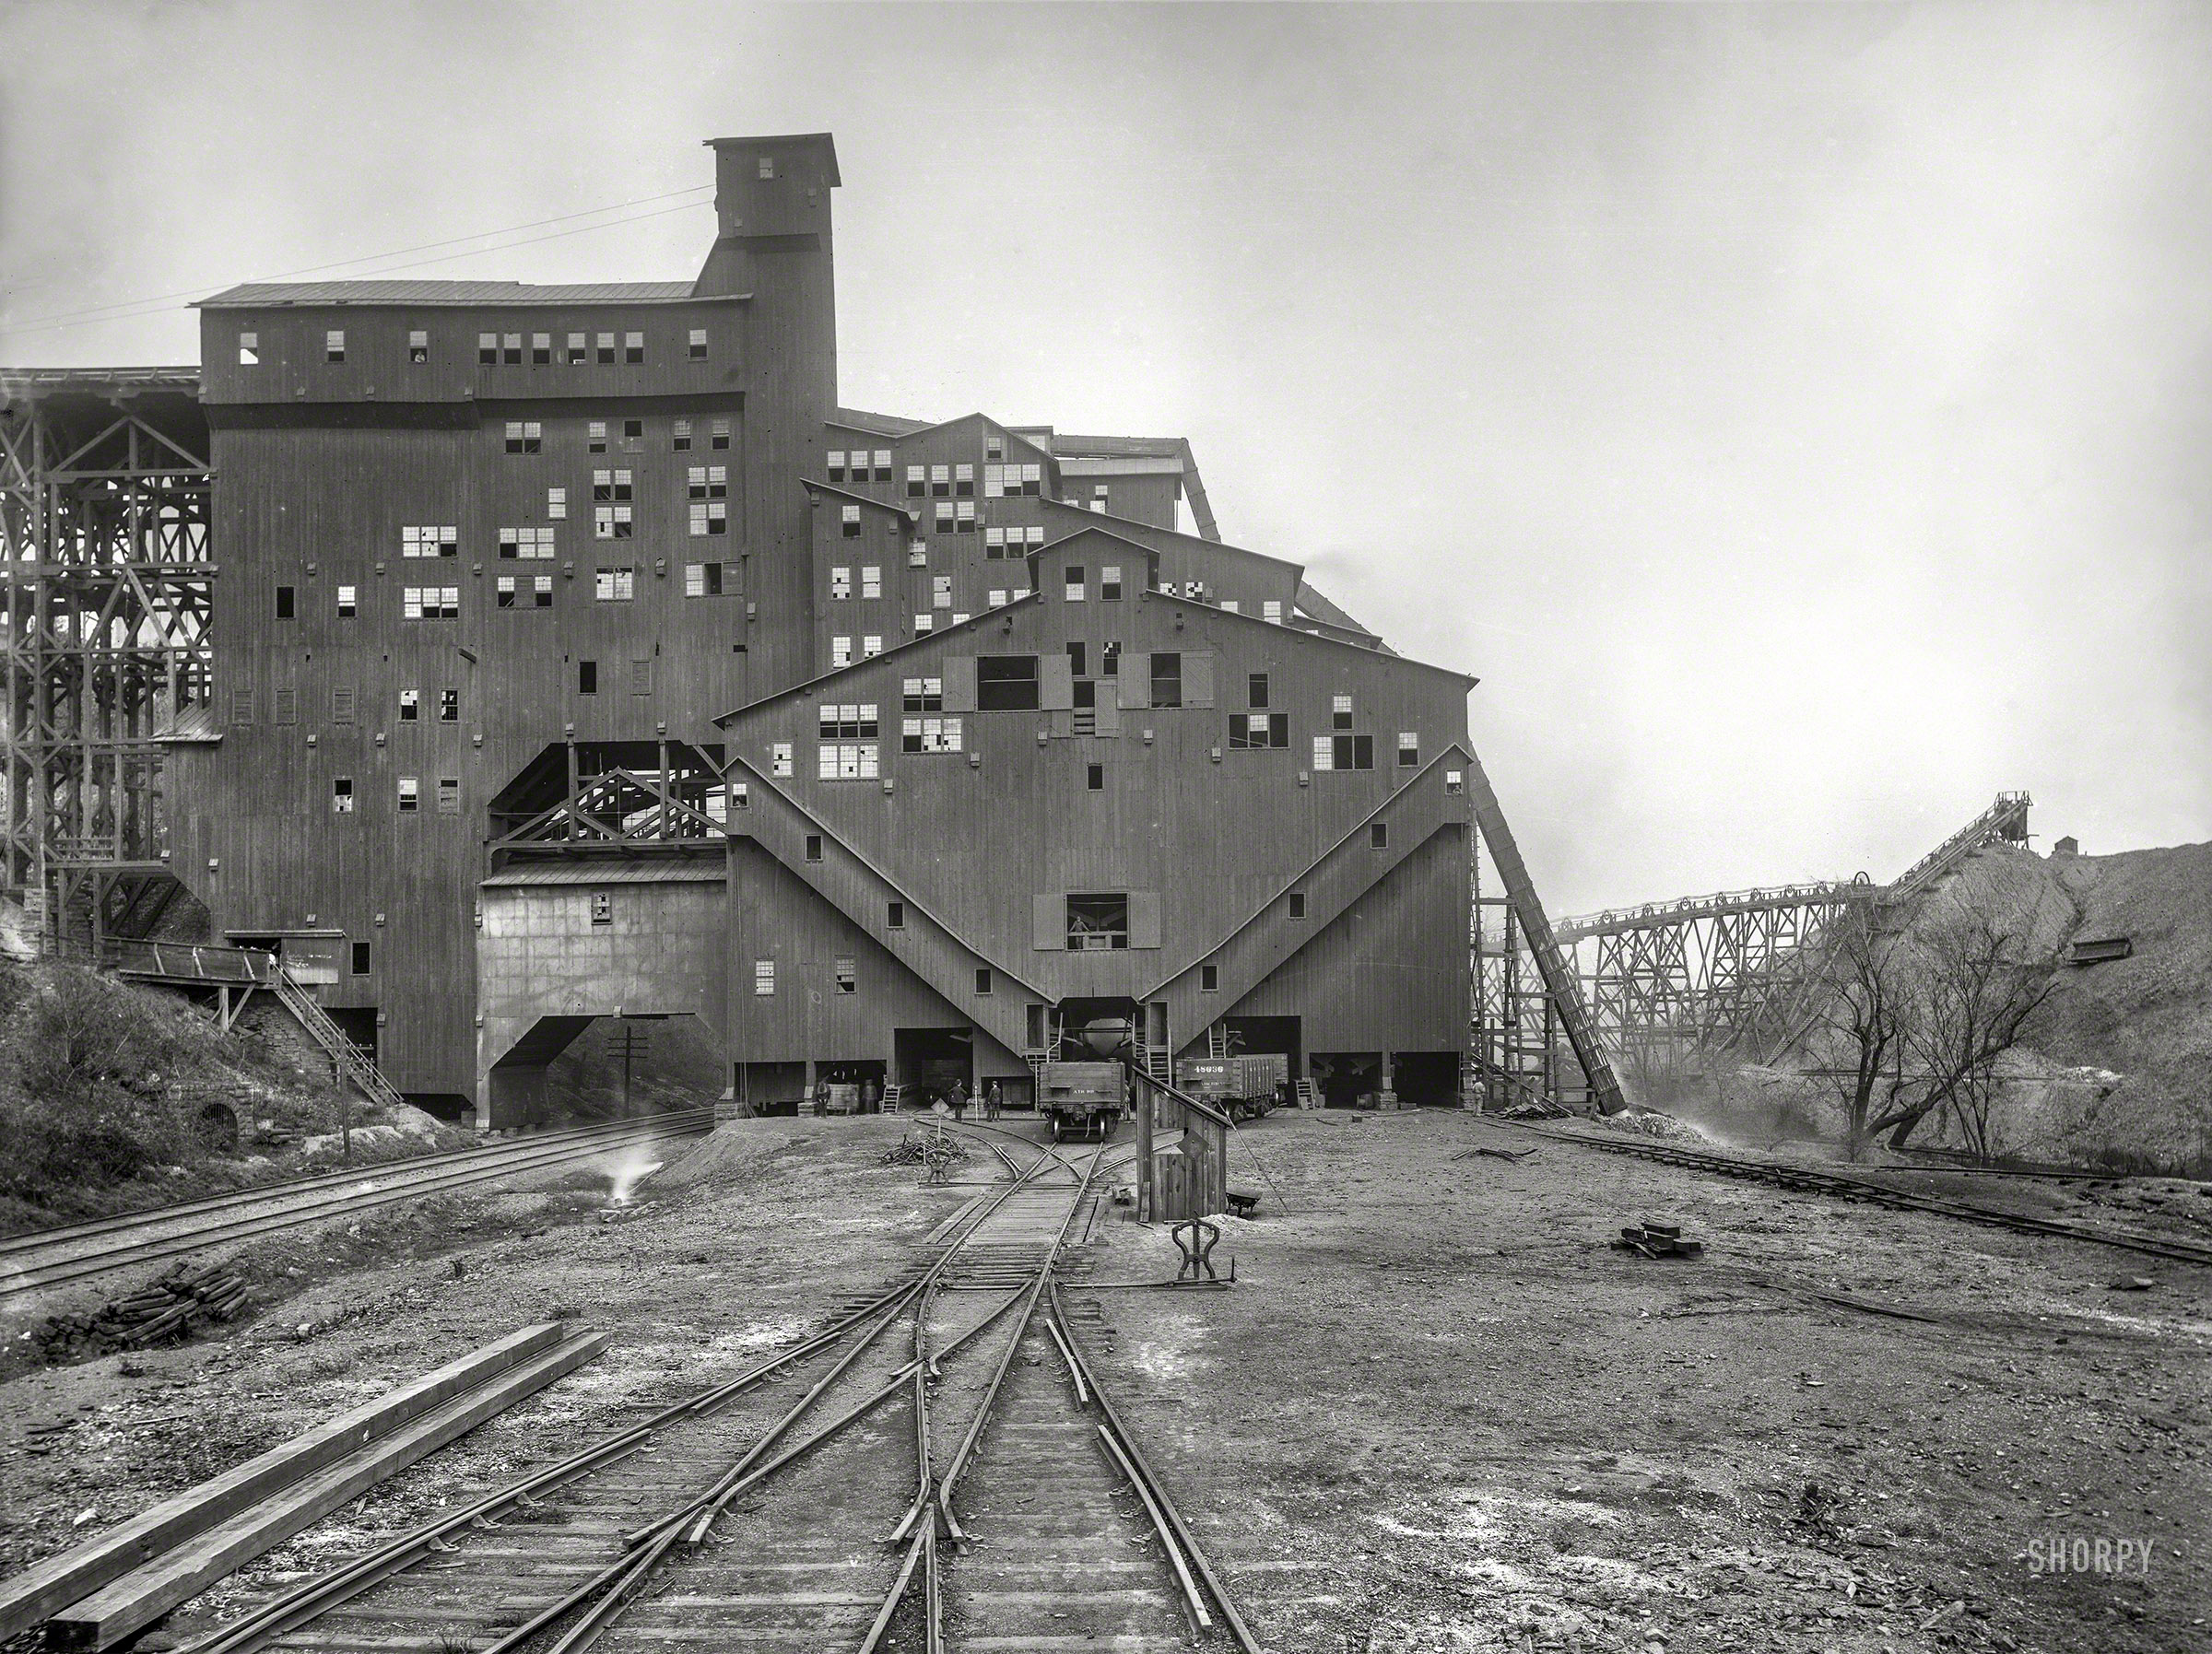 1900. "Woodward coal breaker, Kingston, Pennsylvania." 8x10 inch dry plate glass negative, Detroit Publishing Company. View full size.